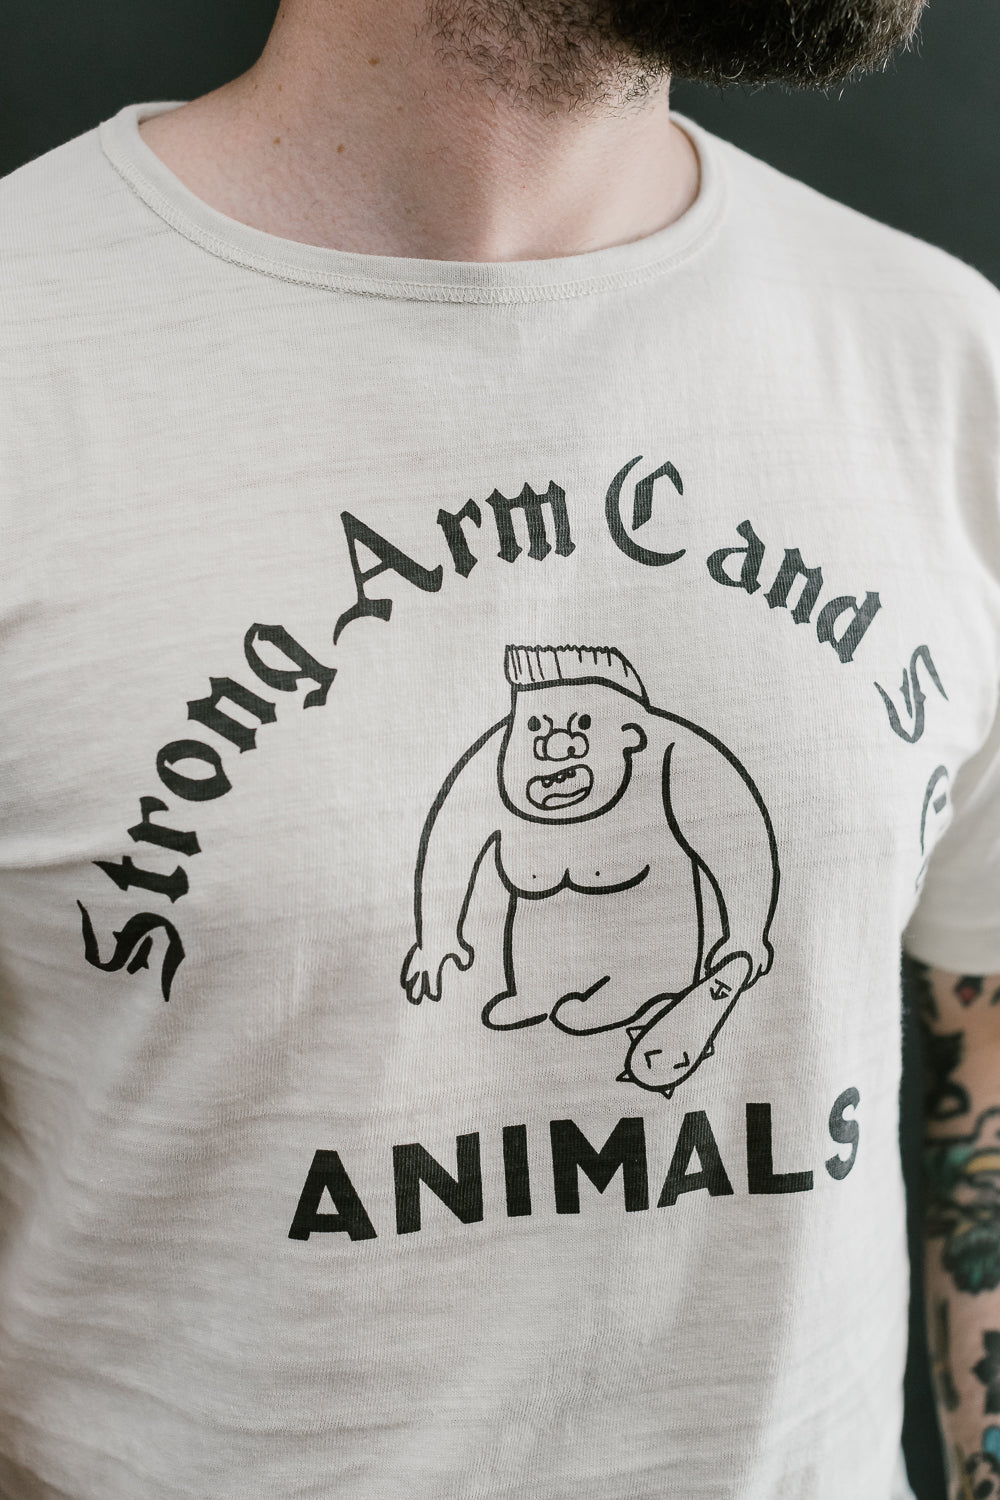 Lot JG-CS05 - Animals Slubby T-Shirt - Beige